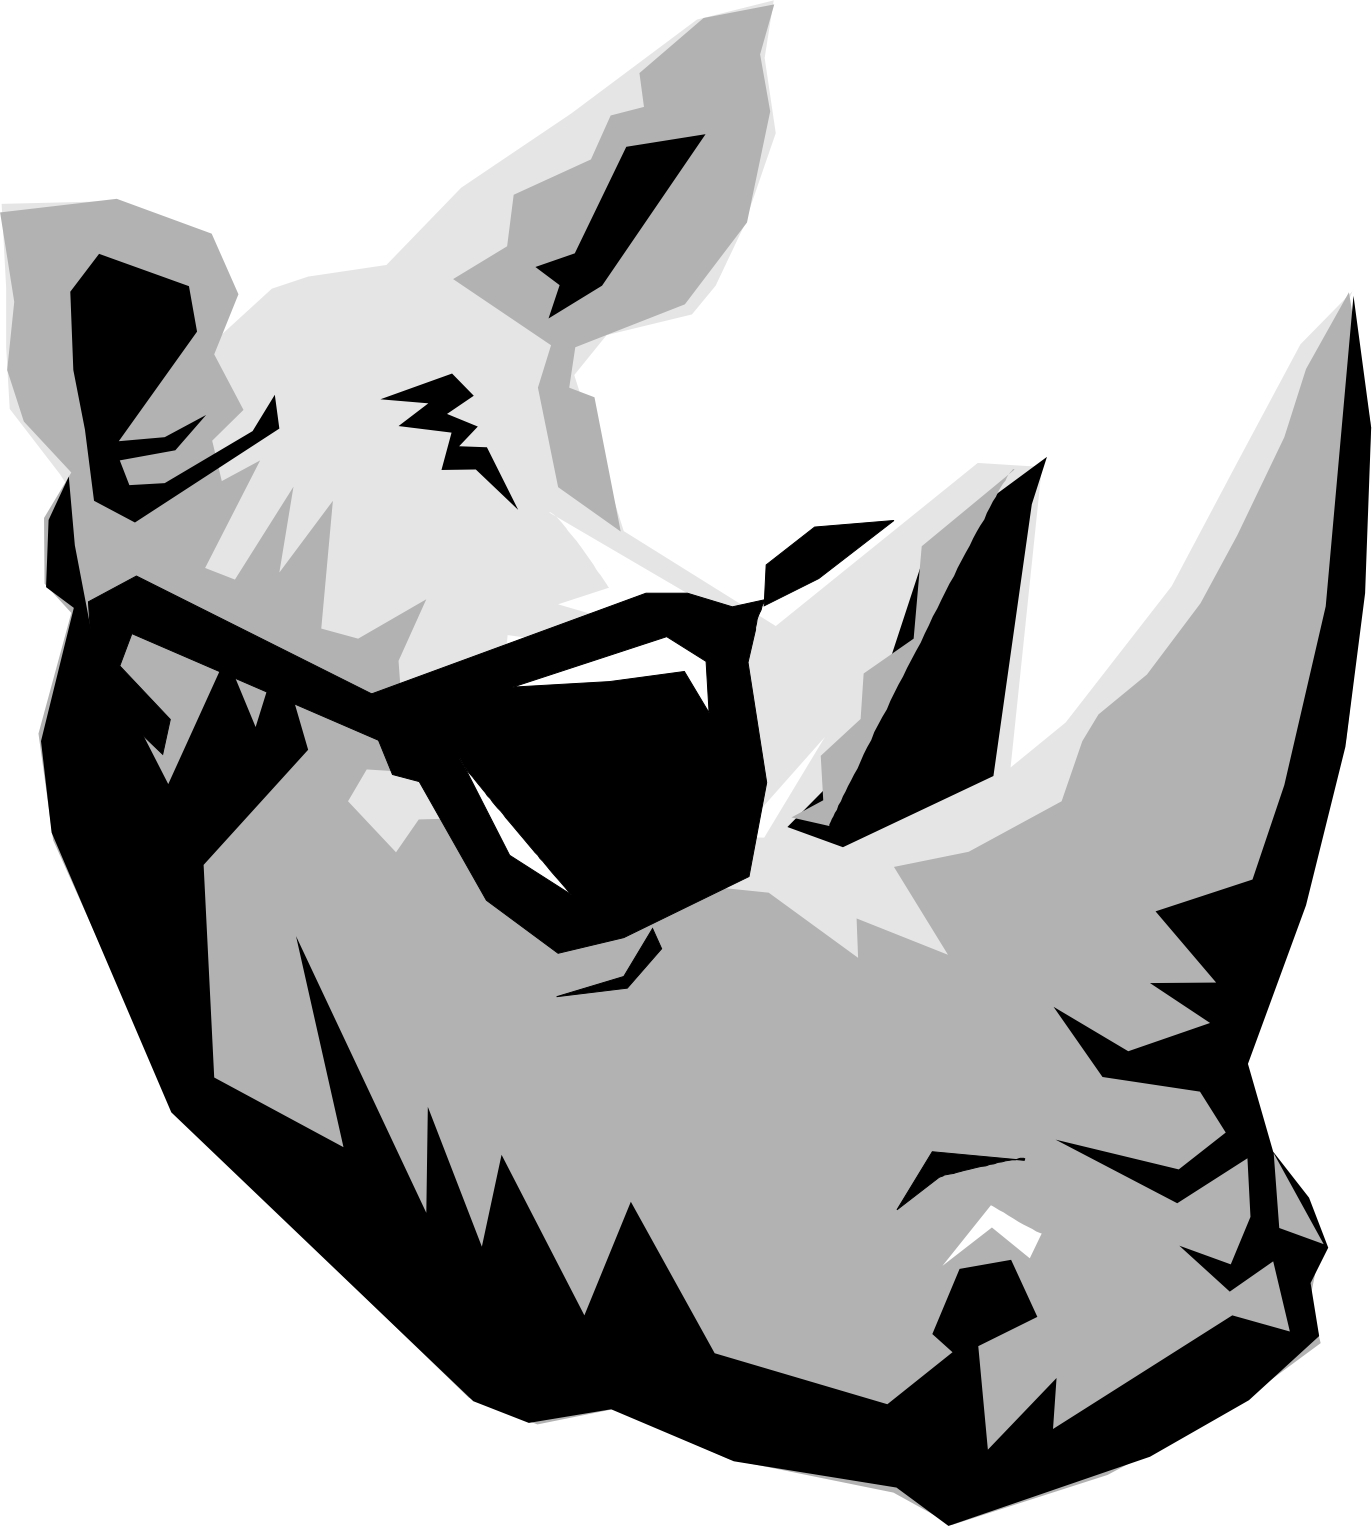 Rhino head clipart - ClipartFox